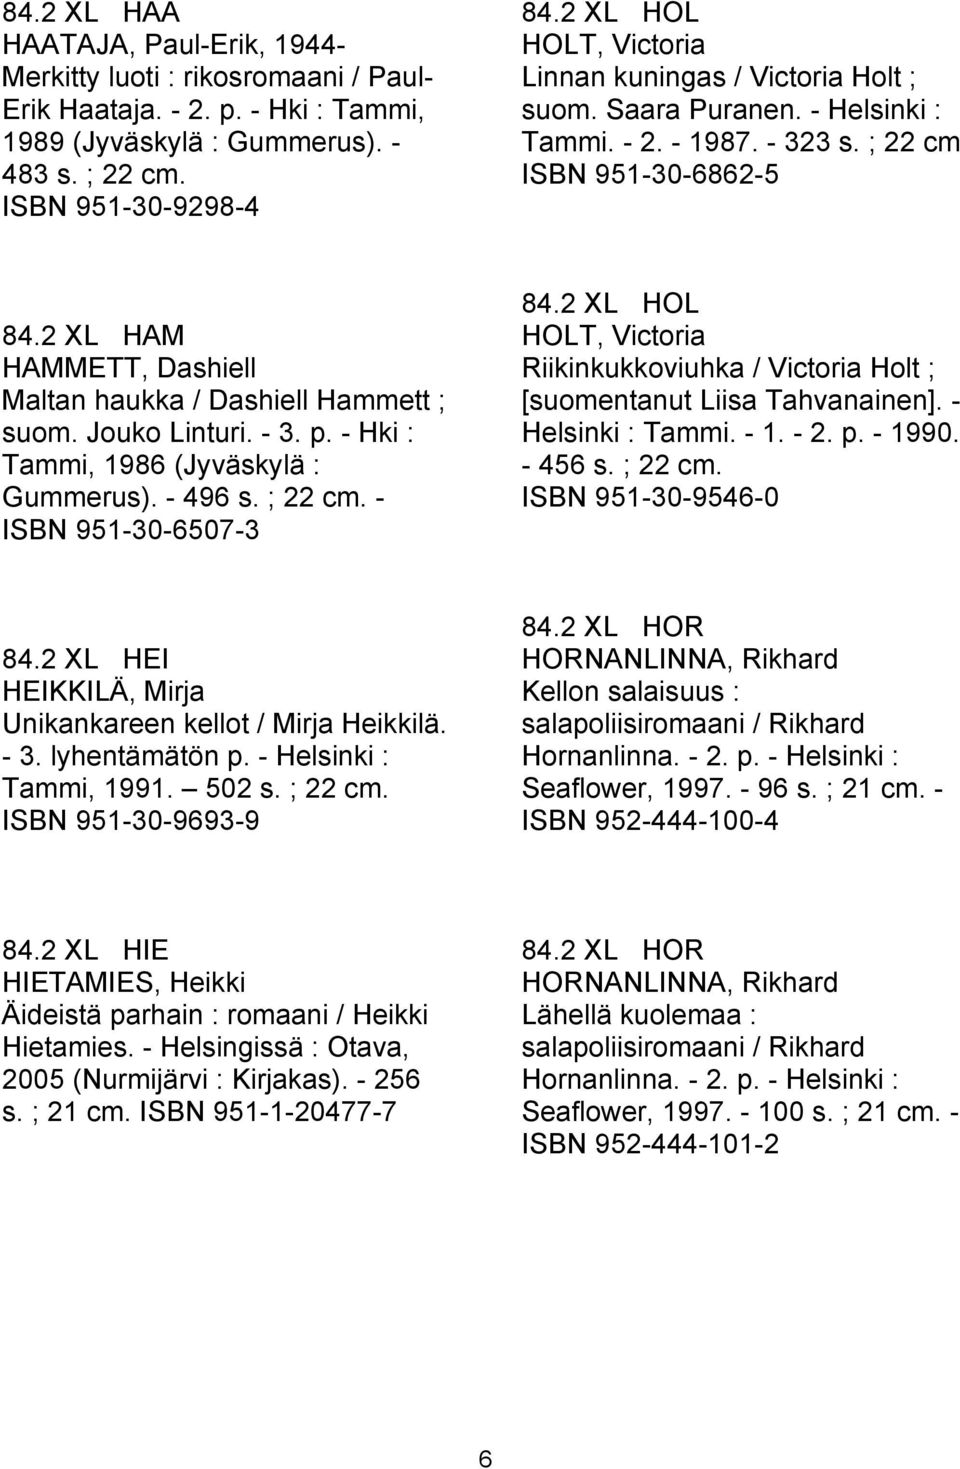 2 XL HAM HAMMETT, Dashiell Maltan haukka / Dashiell Hammett ; suom. Jouko Linturi. - 3. p. - Hki : Tammi, 1986 (Jyväskylä : Gummerus). - 496 s. ; 22 cm. - ISBN 951-30-6507-3 84.